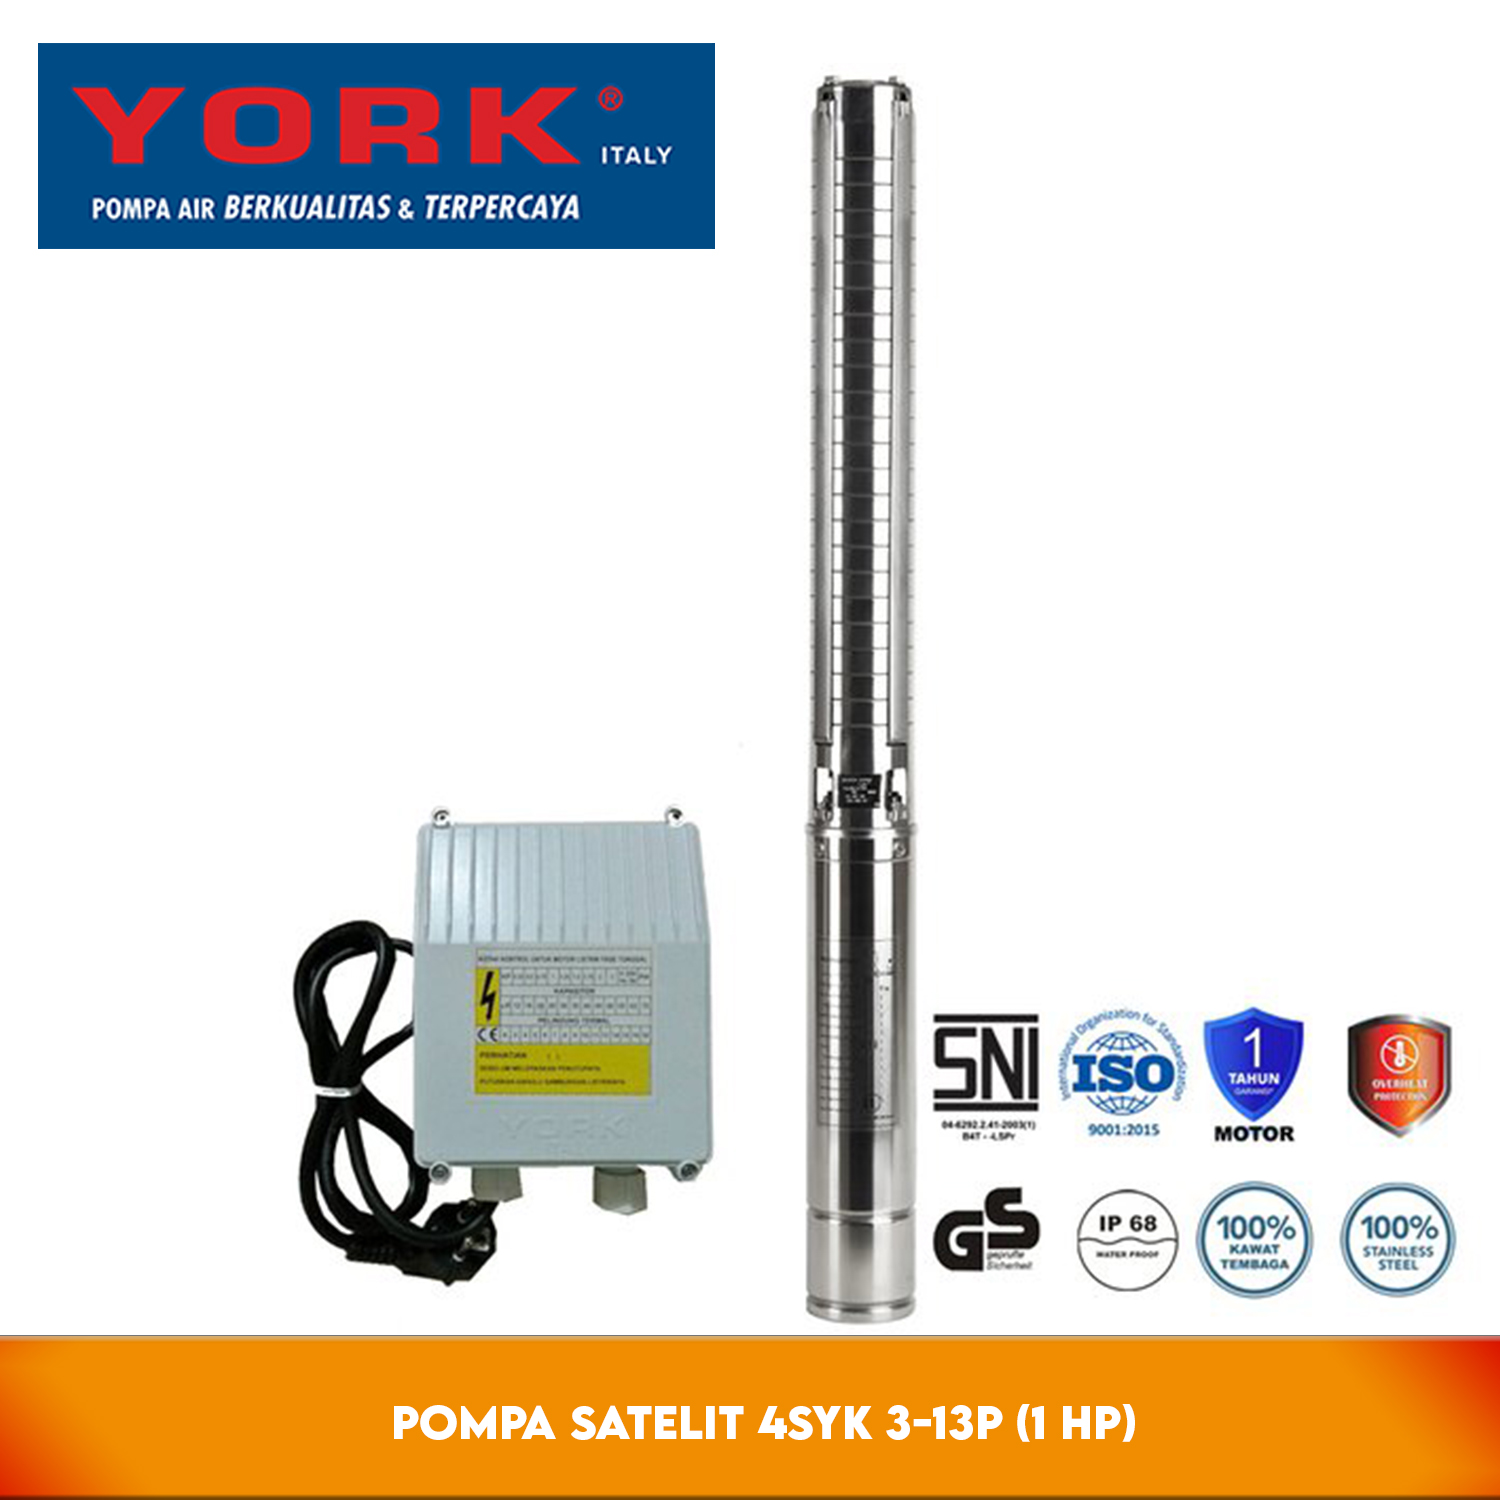 York 4SYK 3-13P (1 HP) + C.BOX + 50 M - Pompa Satelit 